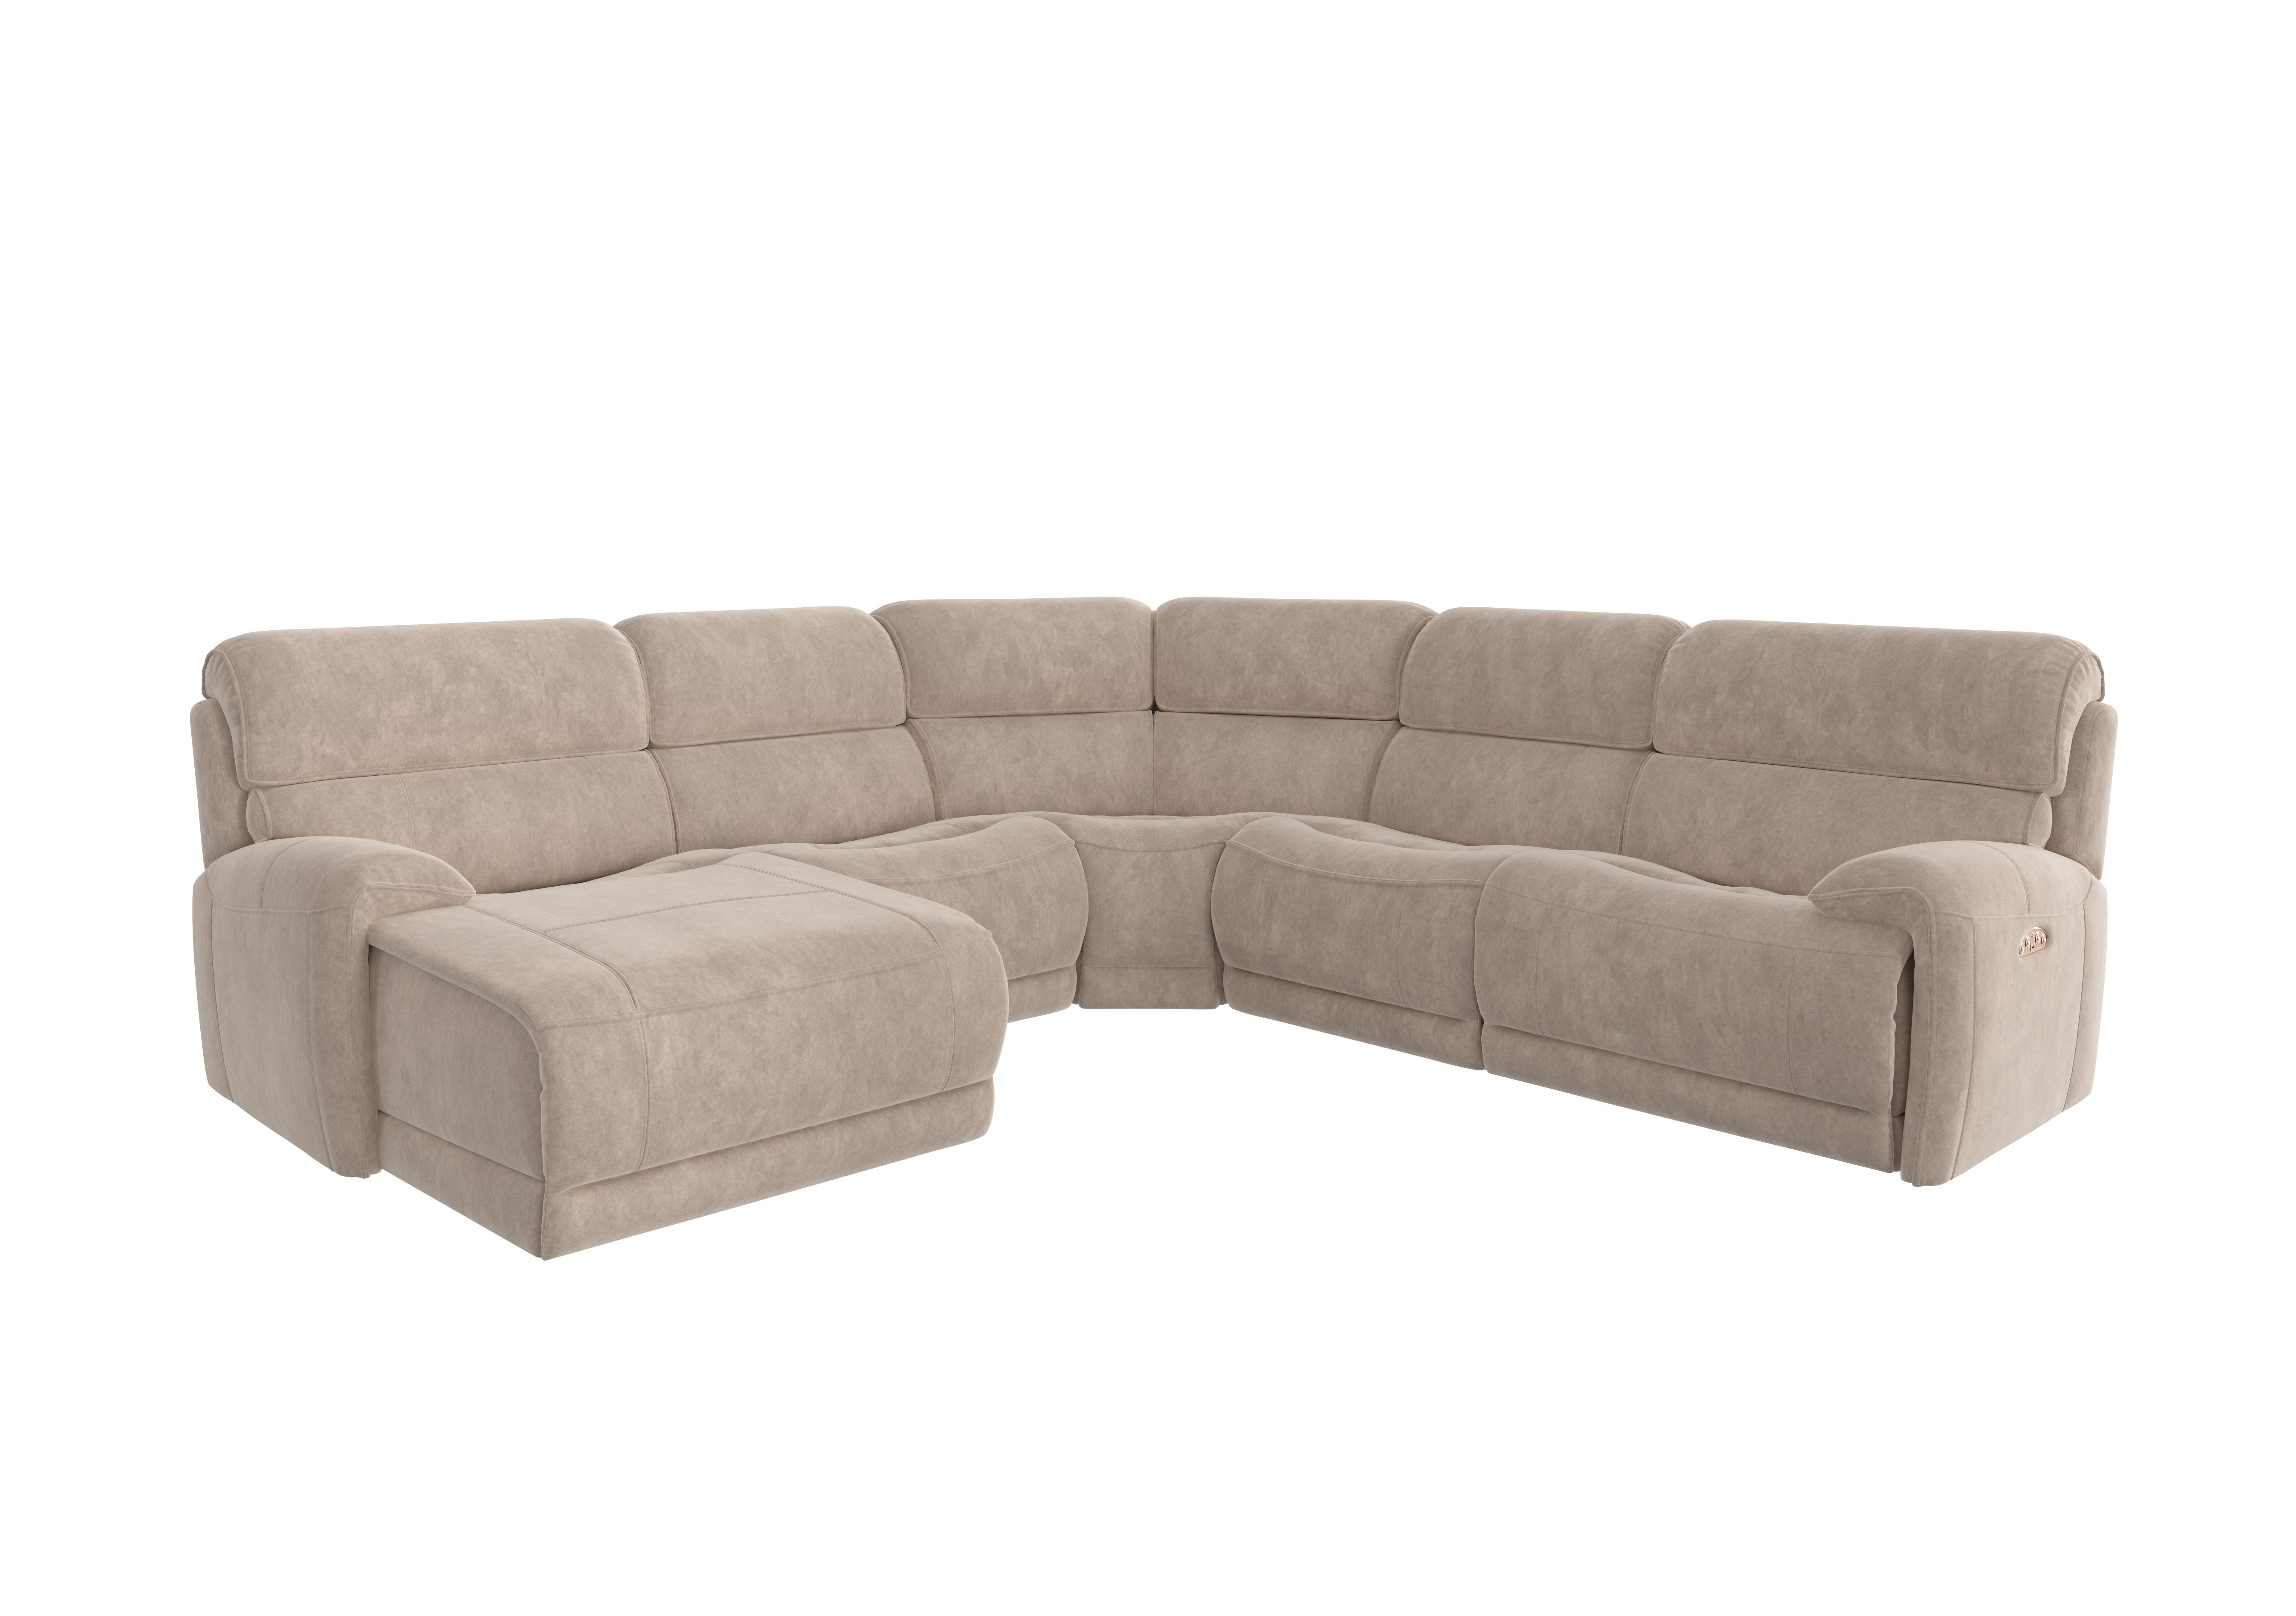 Link Fabric Corner Chaise Power Sofa in Bfa-Bnn-R26 Fv2 Cream on Furniture Village